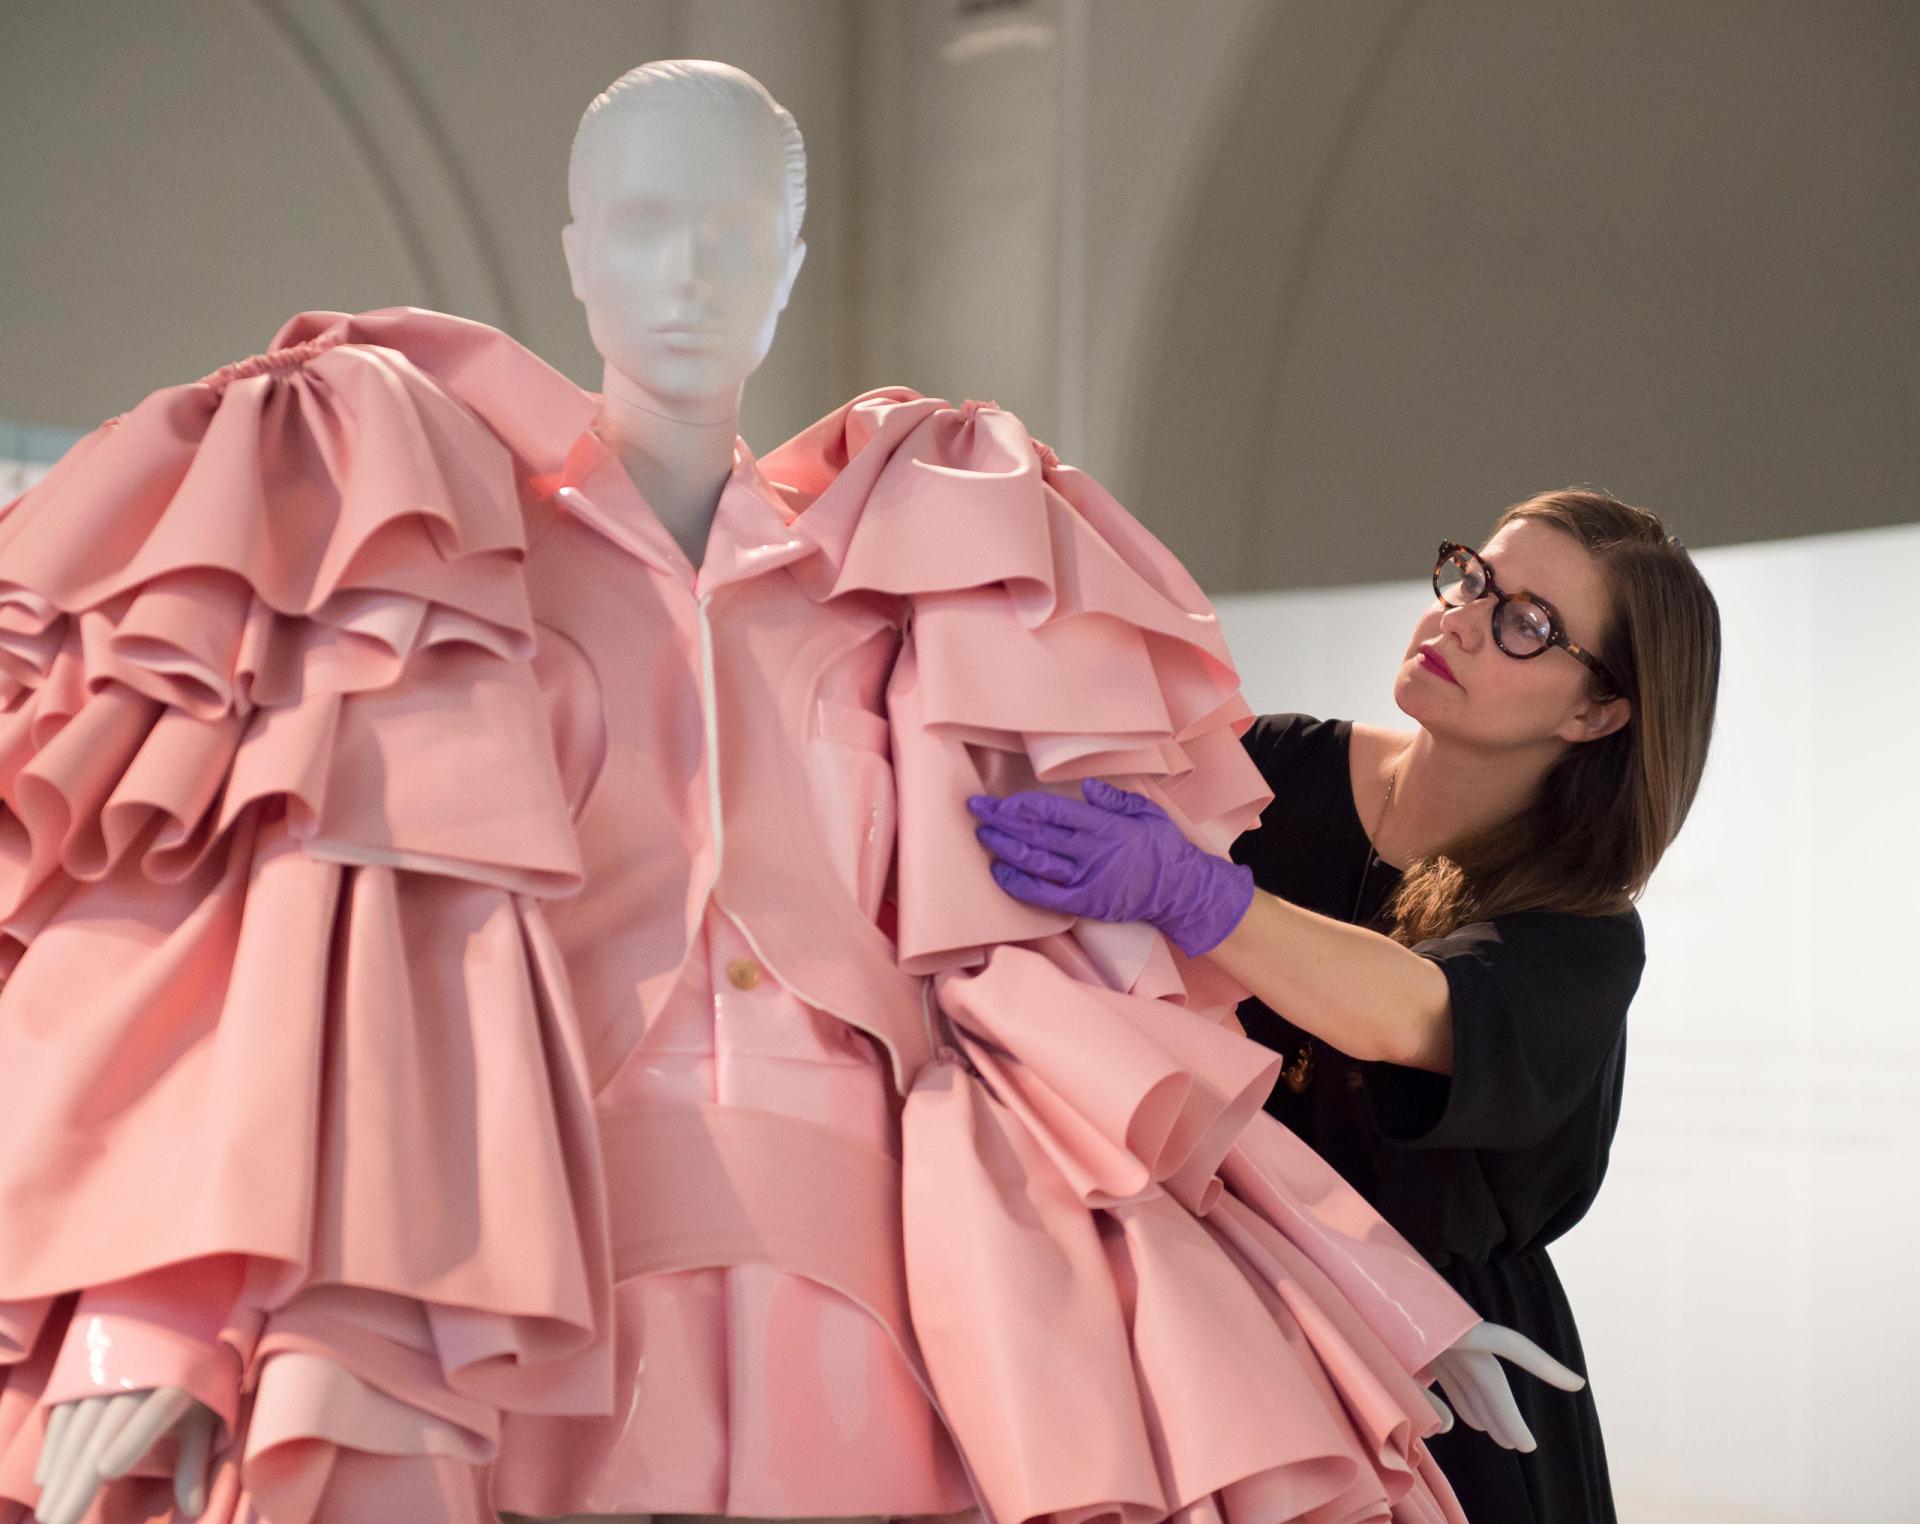 Gazar, the haute couture fabric invented for Cristobal Balenciaga - ALL-I-C